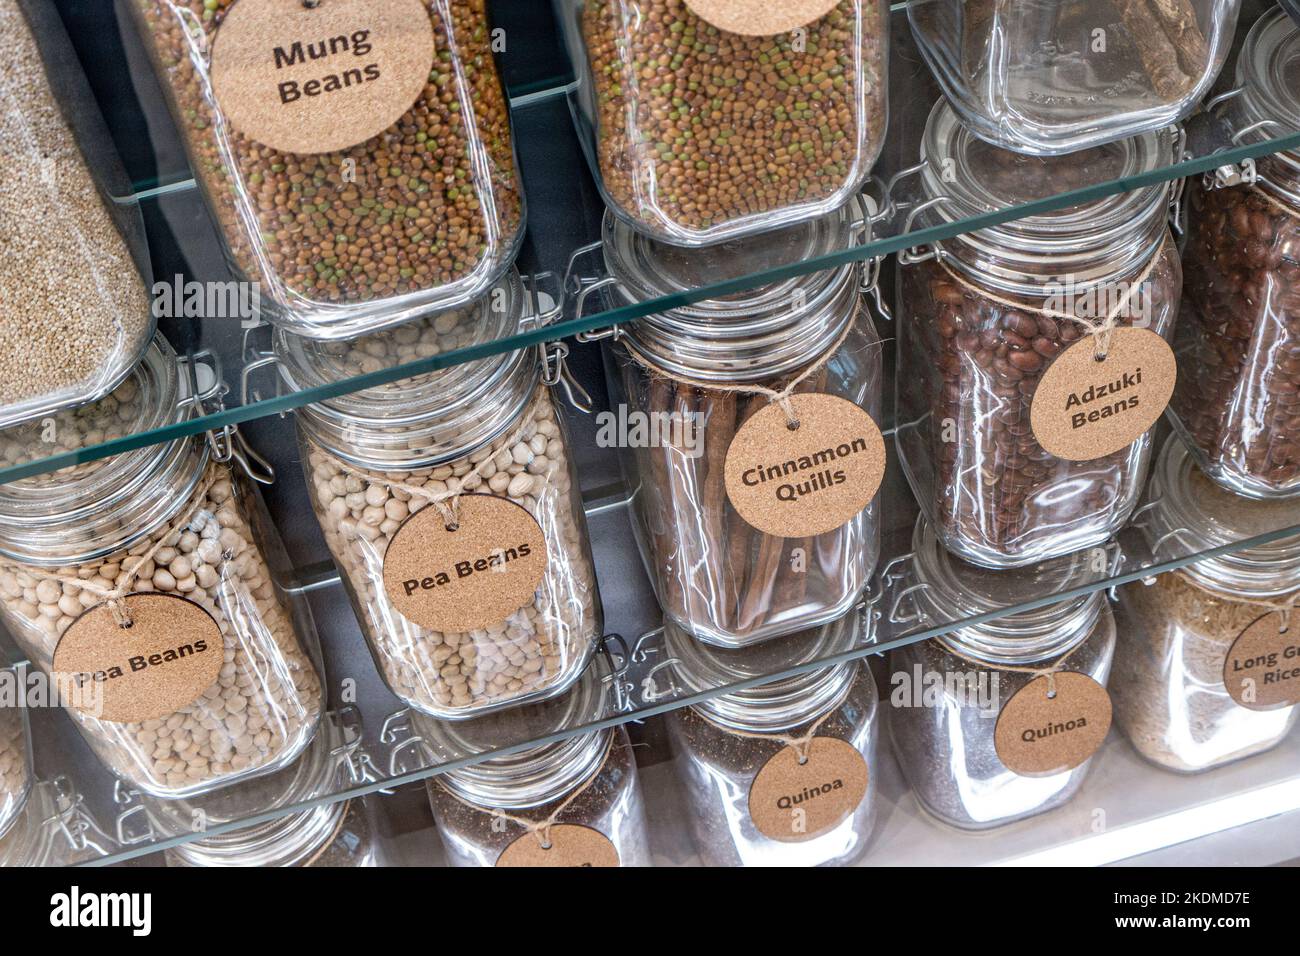 Health Foods Food Ingredients, Detox, Mung, Pea Beans, Cinnamon Quills, Adzuki beans in healthfood store situation in glass storage jars on display. Stock Photo